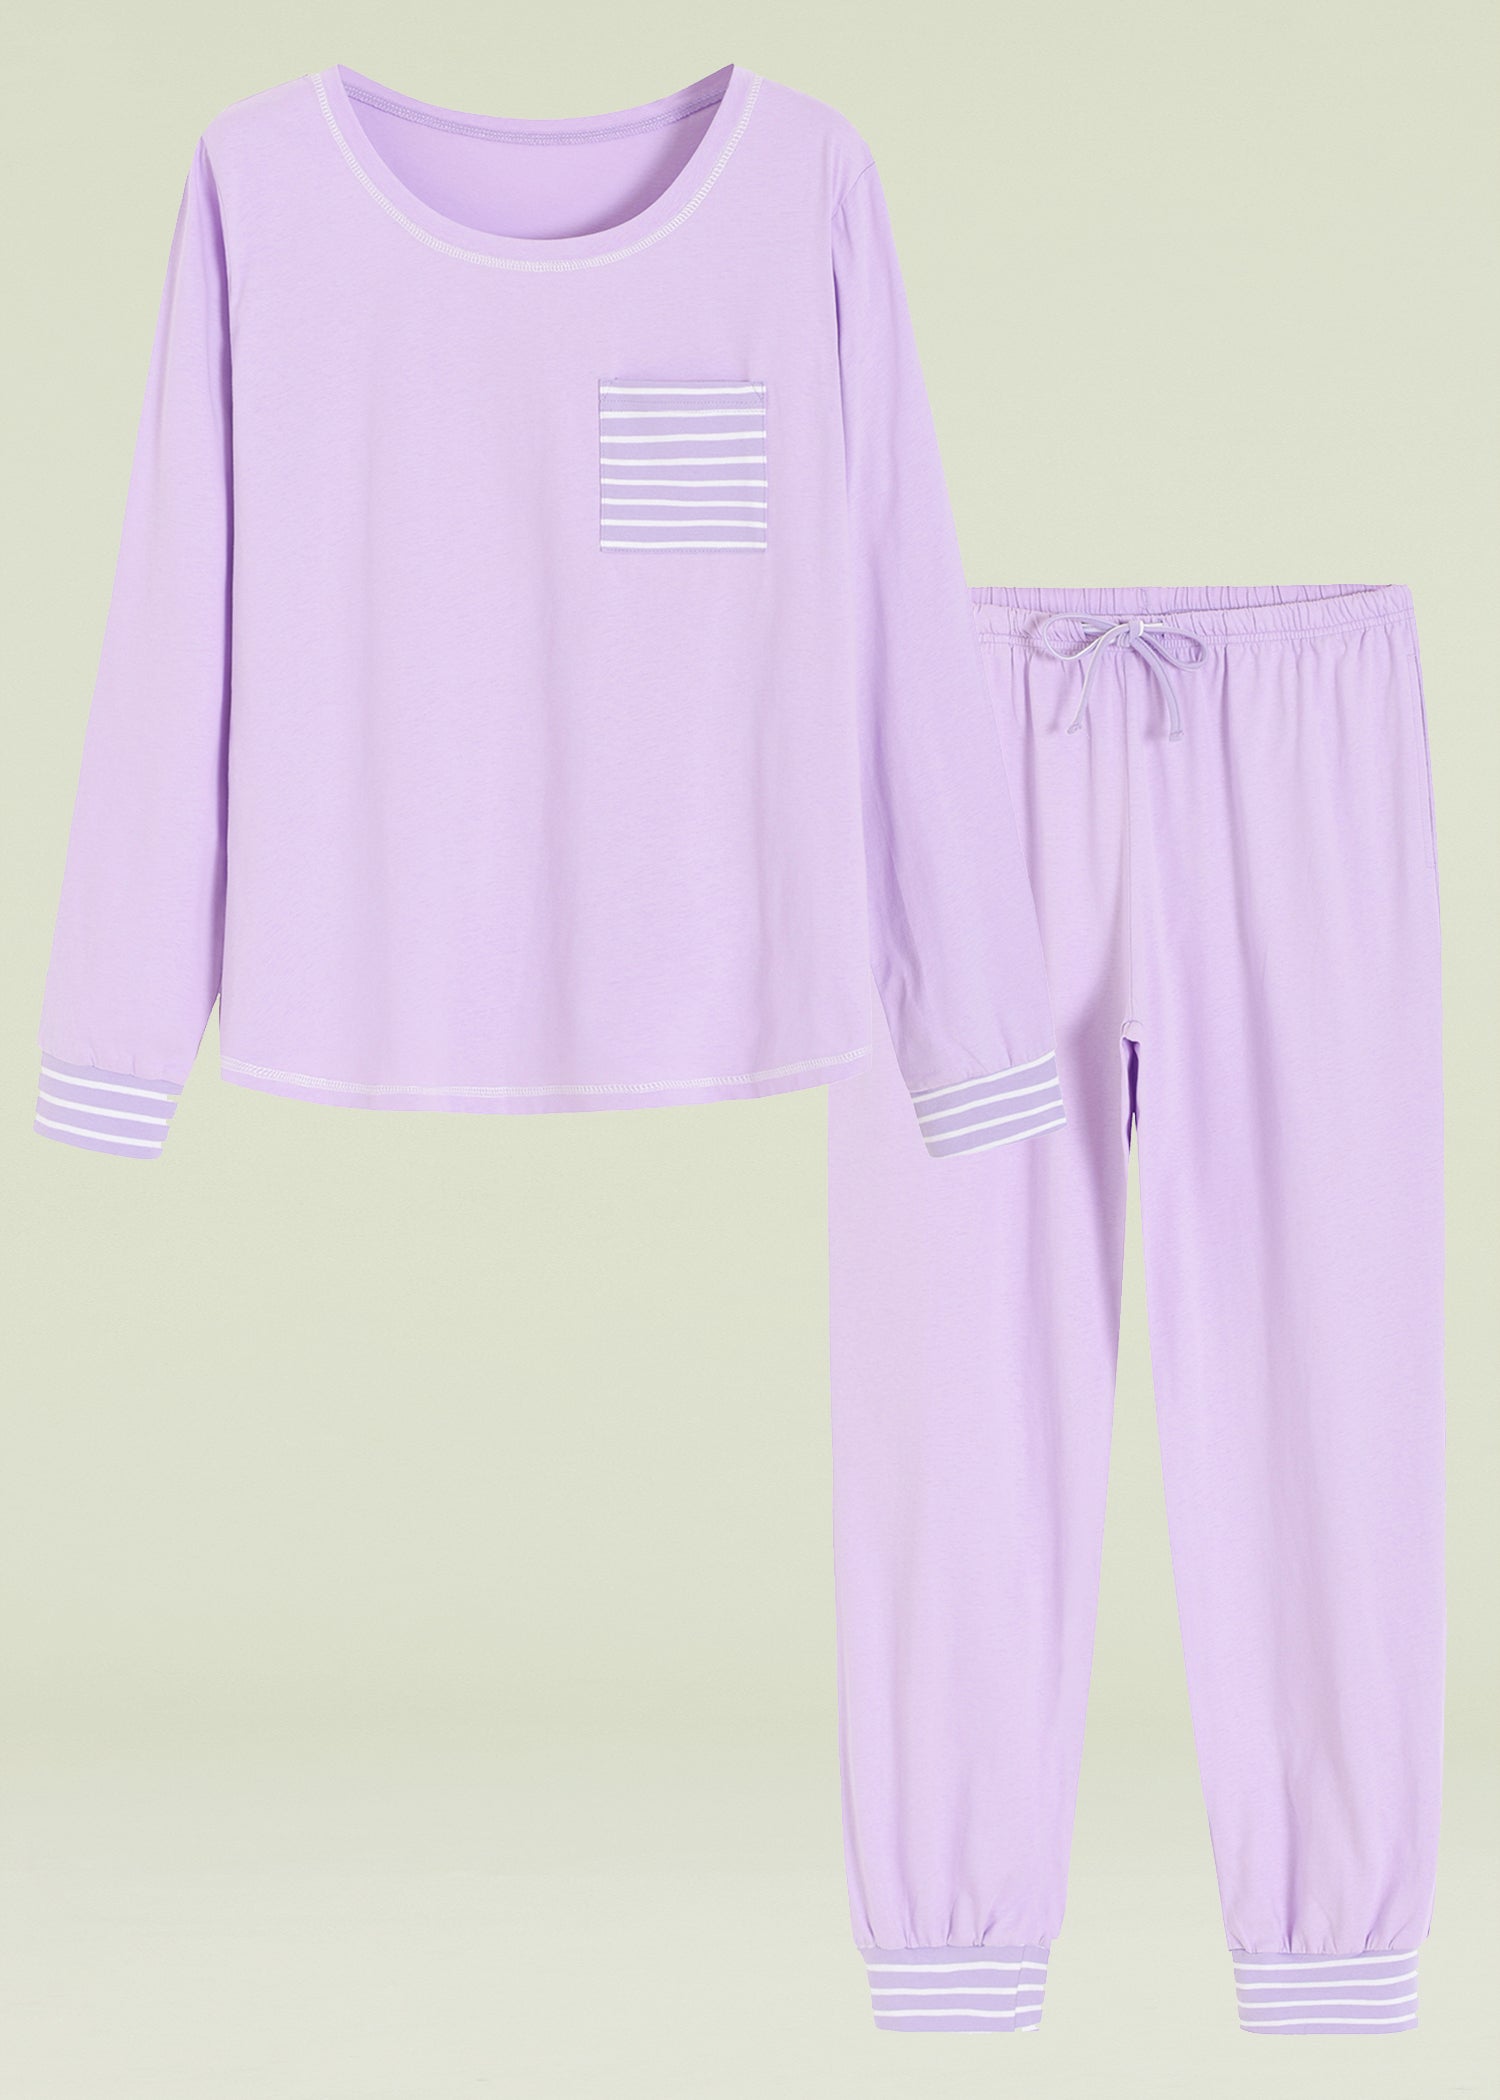 Siagua Women's Pajama Set 80s 90s Geometric Pattern Cute Printed Long  Sleeve Tops and Sleepwear Pjs Sets at  Women’s Clothing store